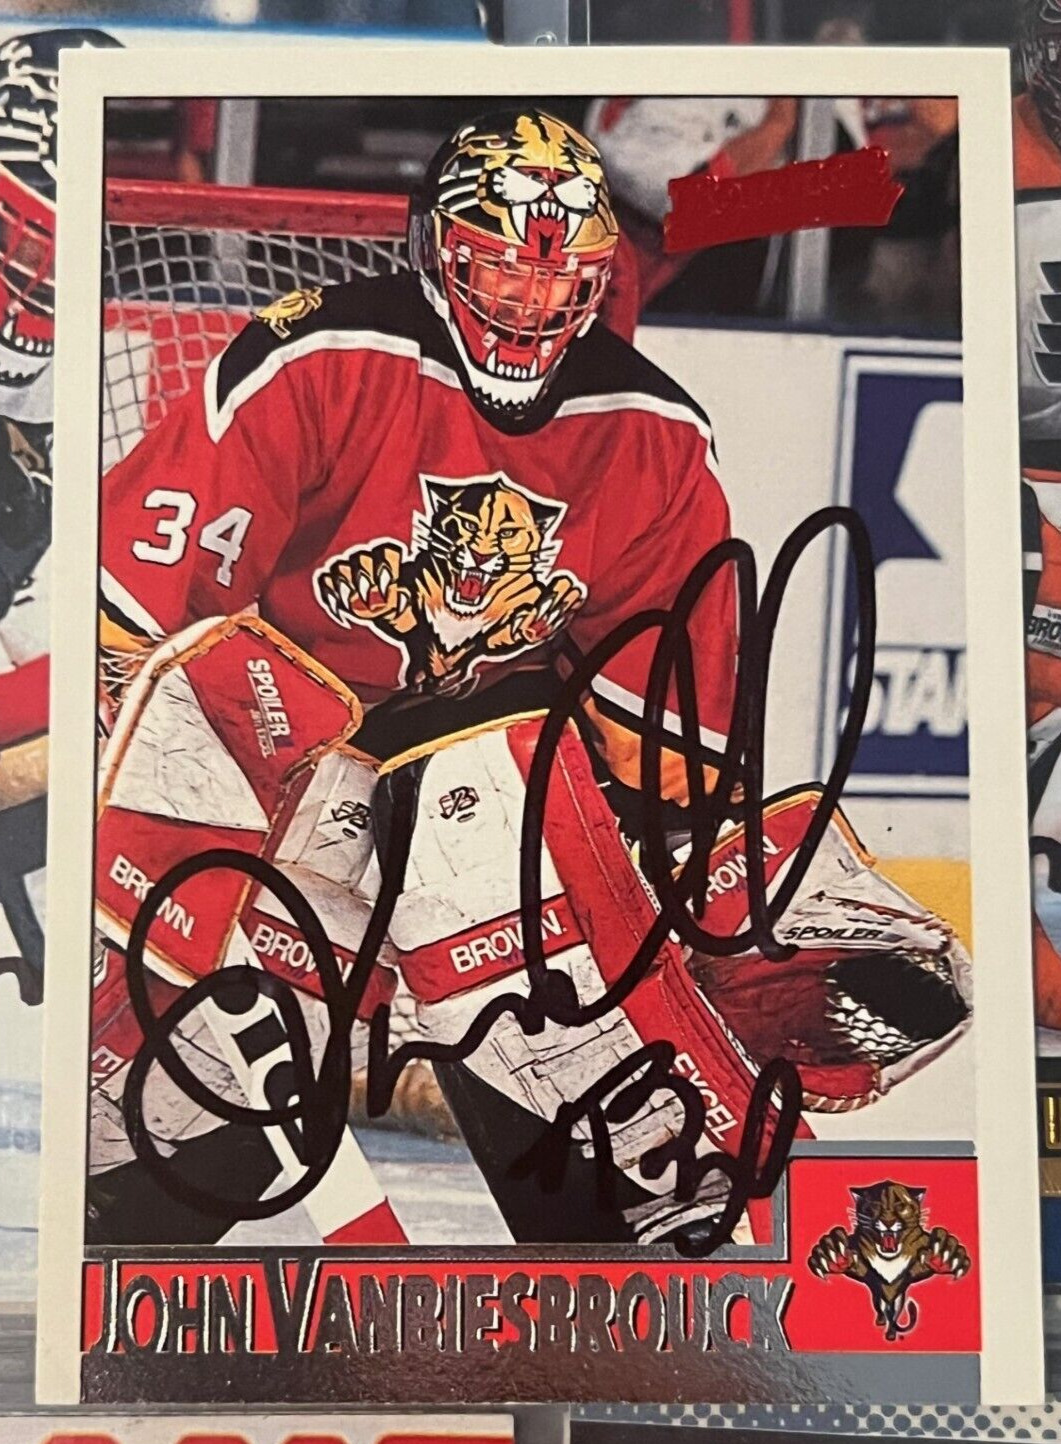 John Vanbiesbrouck signed autographed 1995-96 Bowman Panthers Hockey Card #30